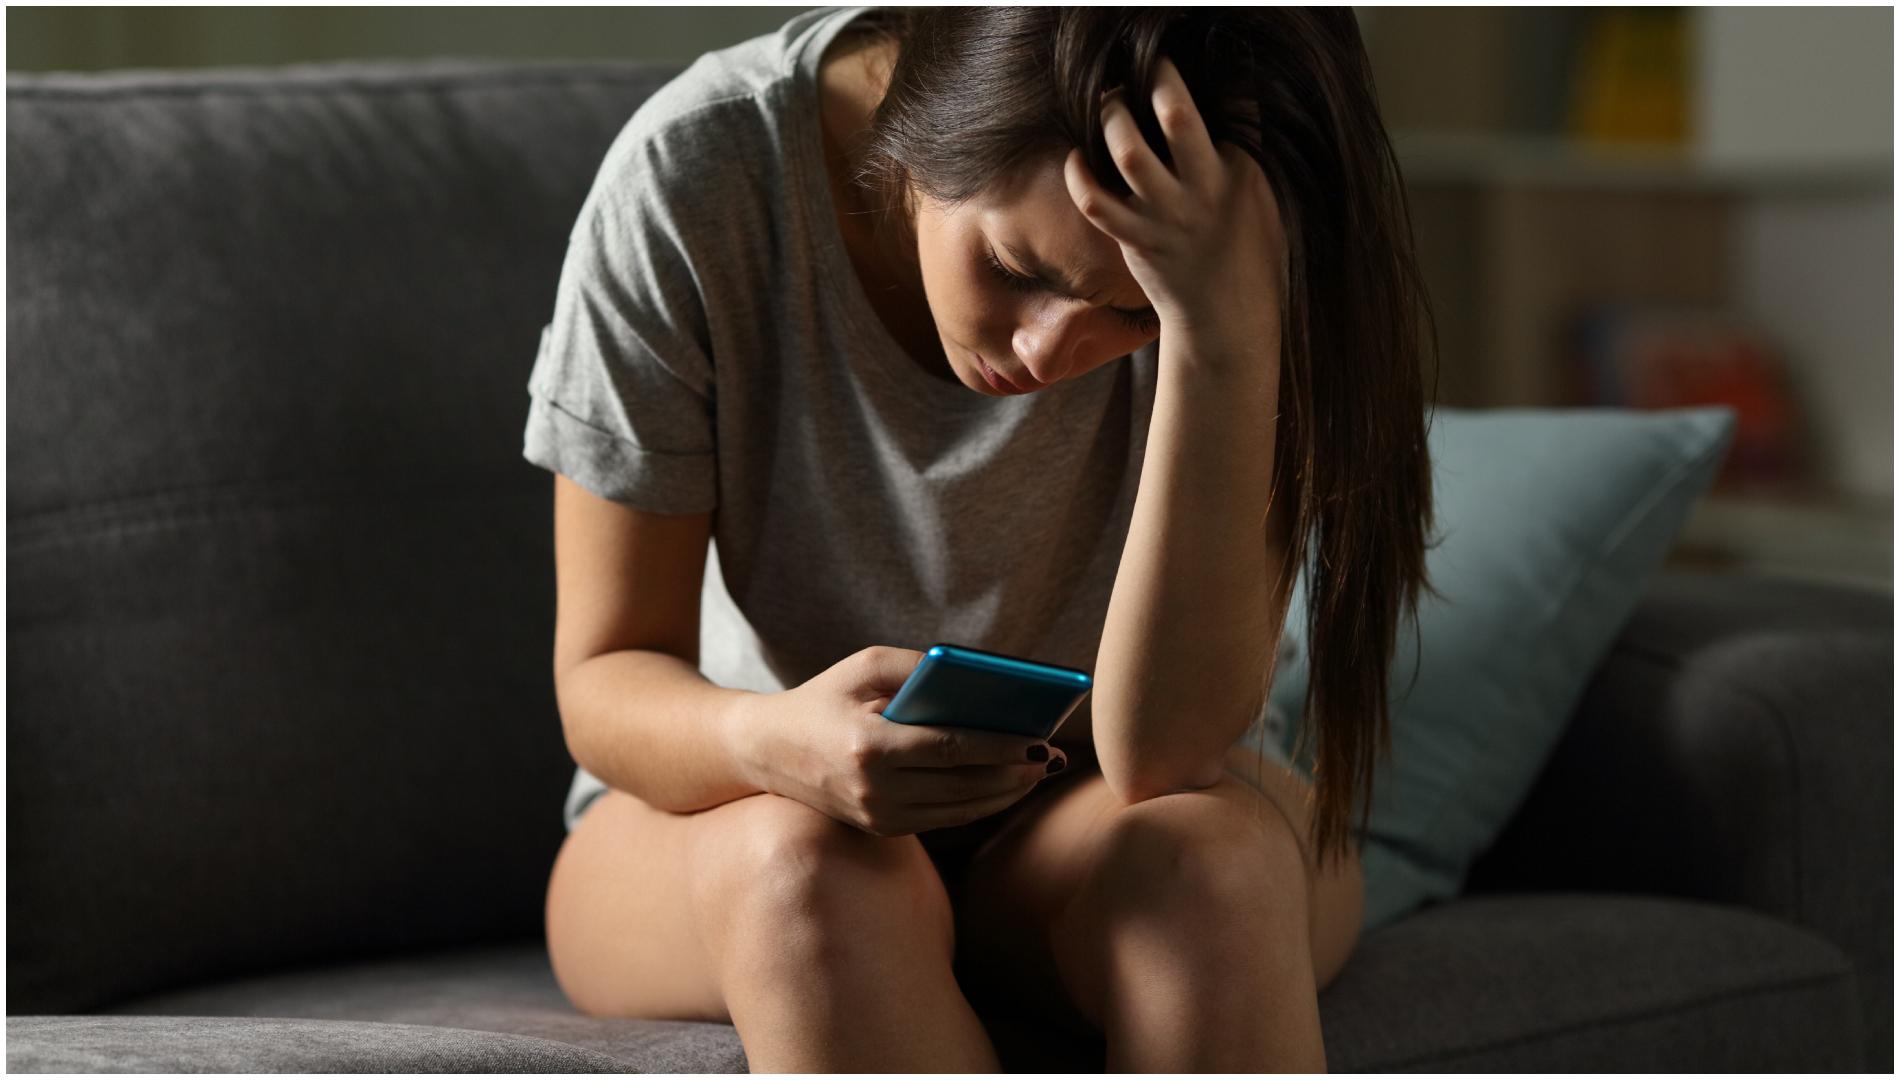 Una joven consulta el móvil preocupada (Shutterstock)